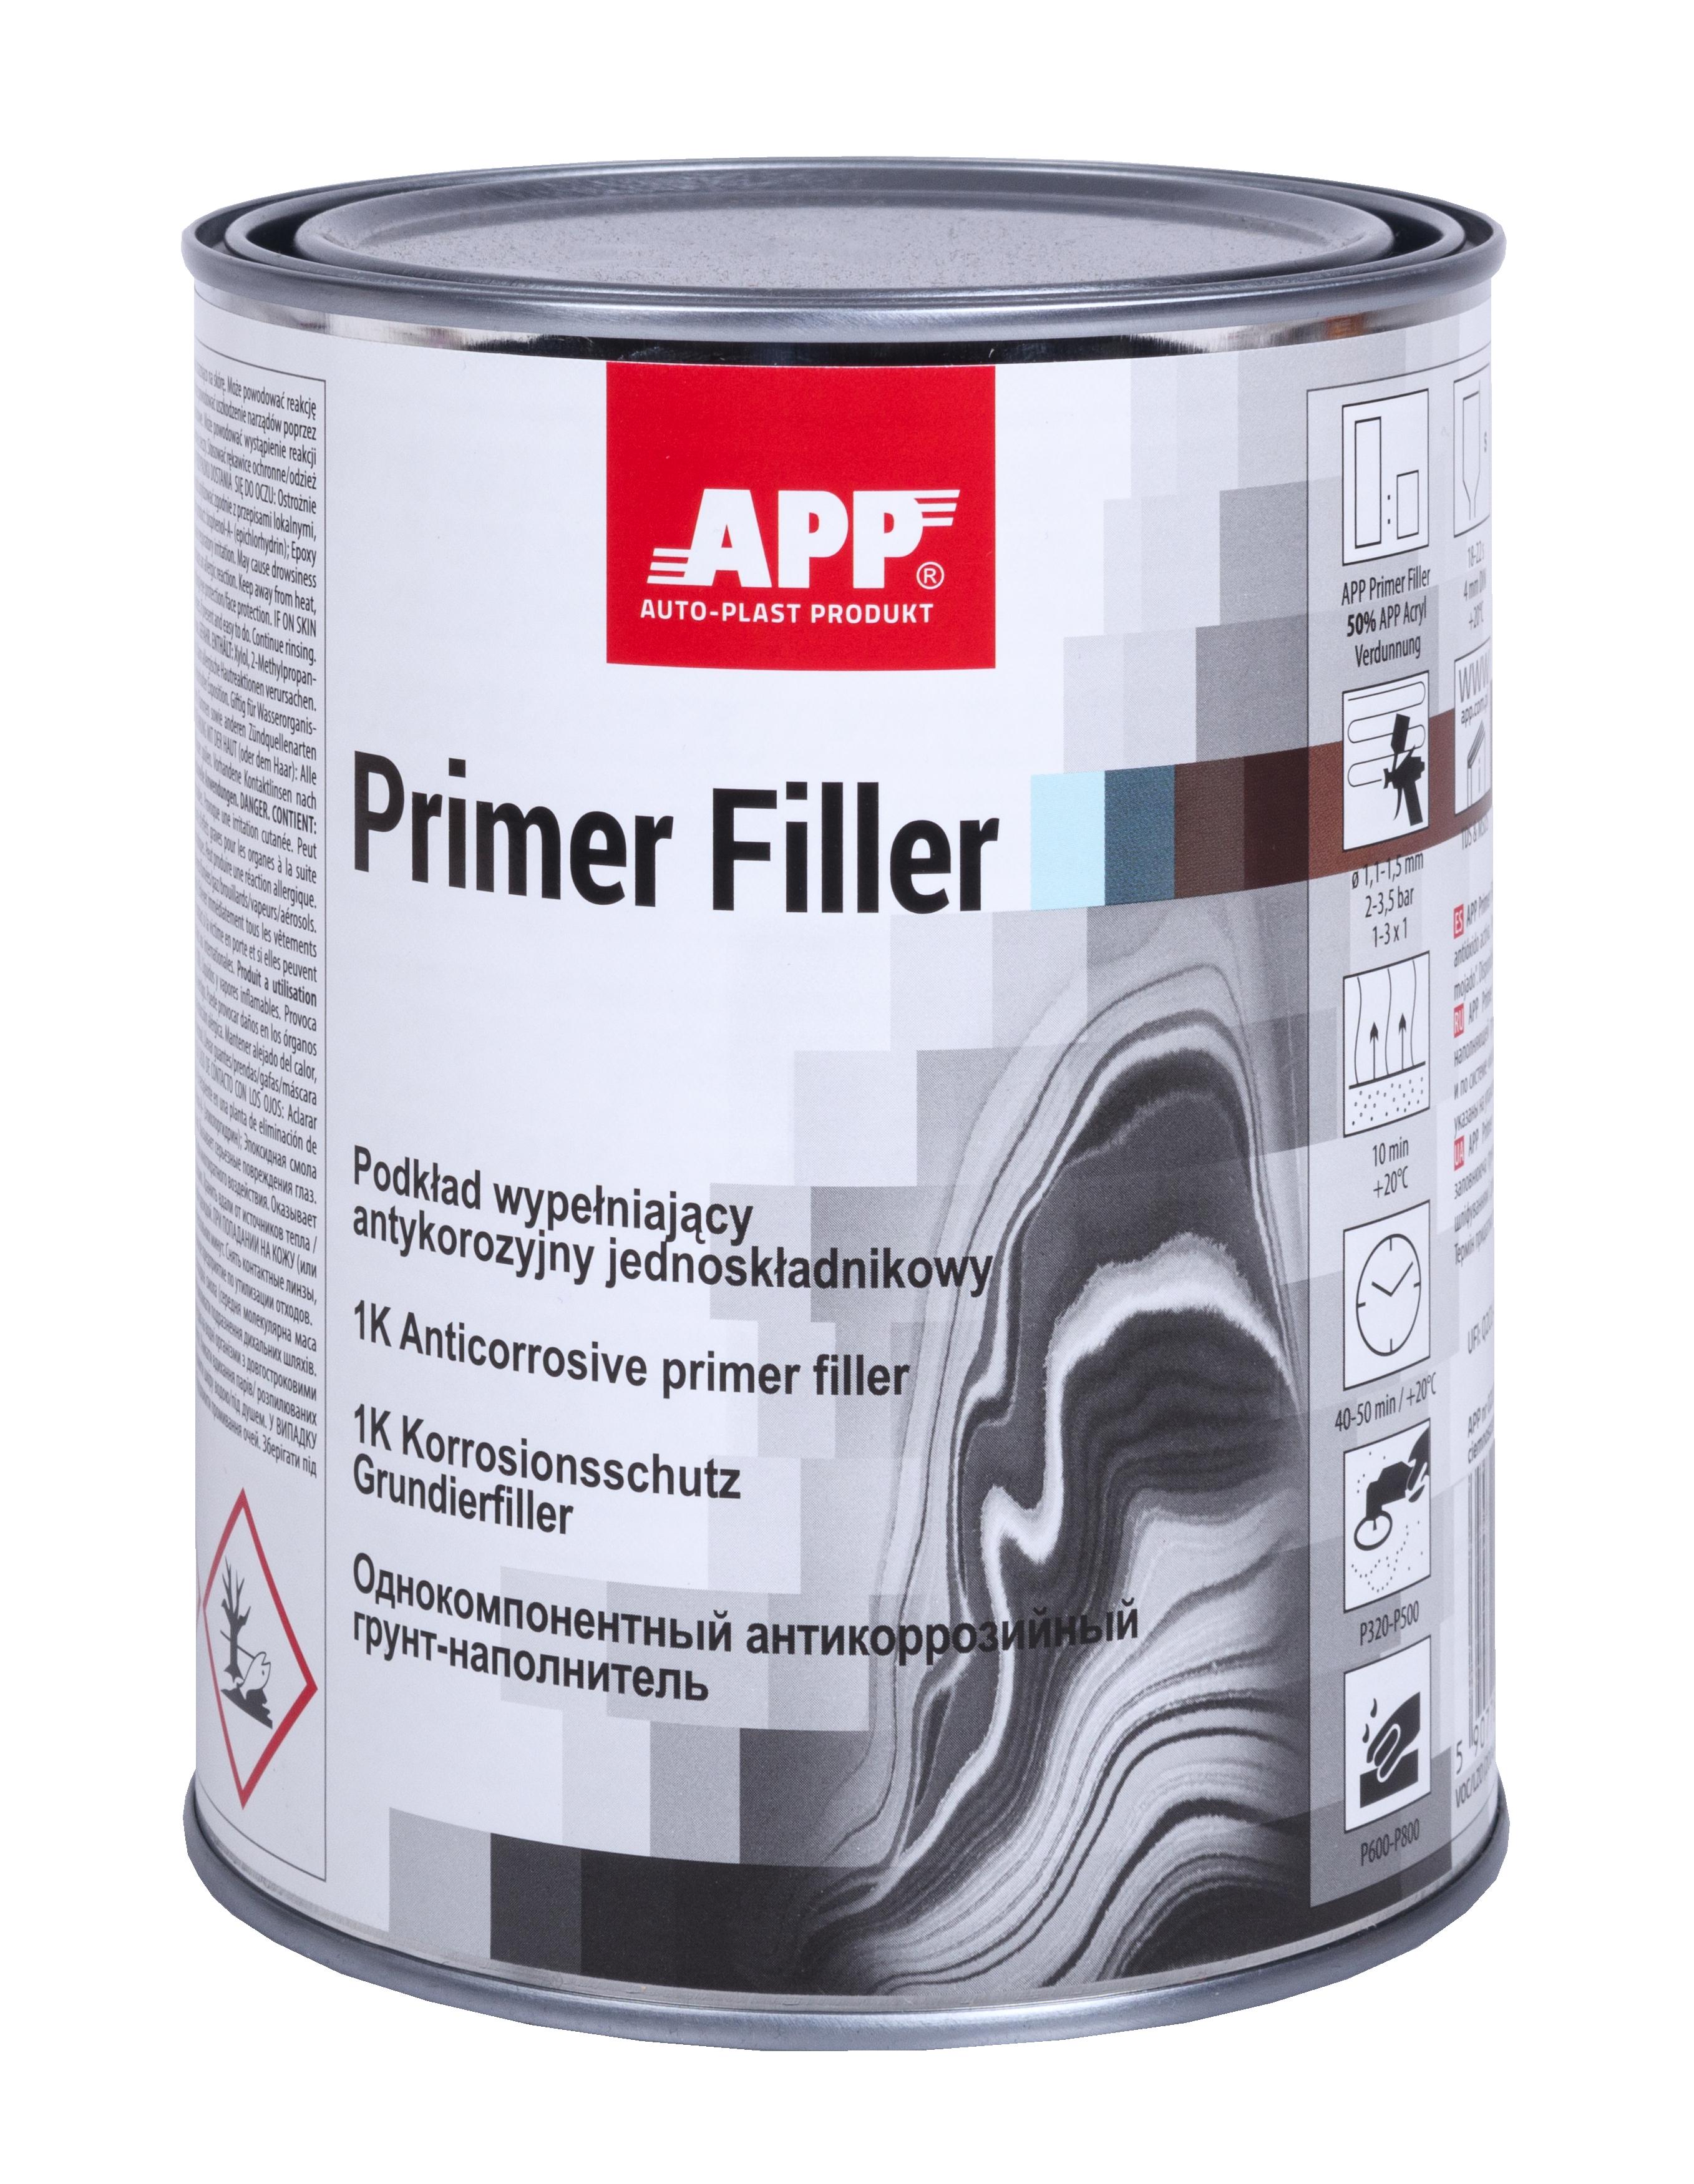 APP 020710 Primer Filler - Antikorrosion 1K Füllgrundierung dunkelgrau 1,0 L | Grundierung Korrosionsschutz Füller